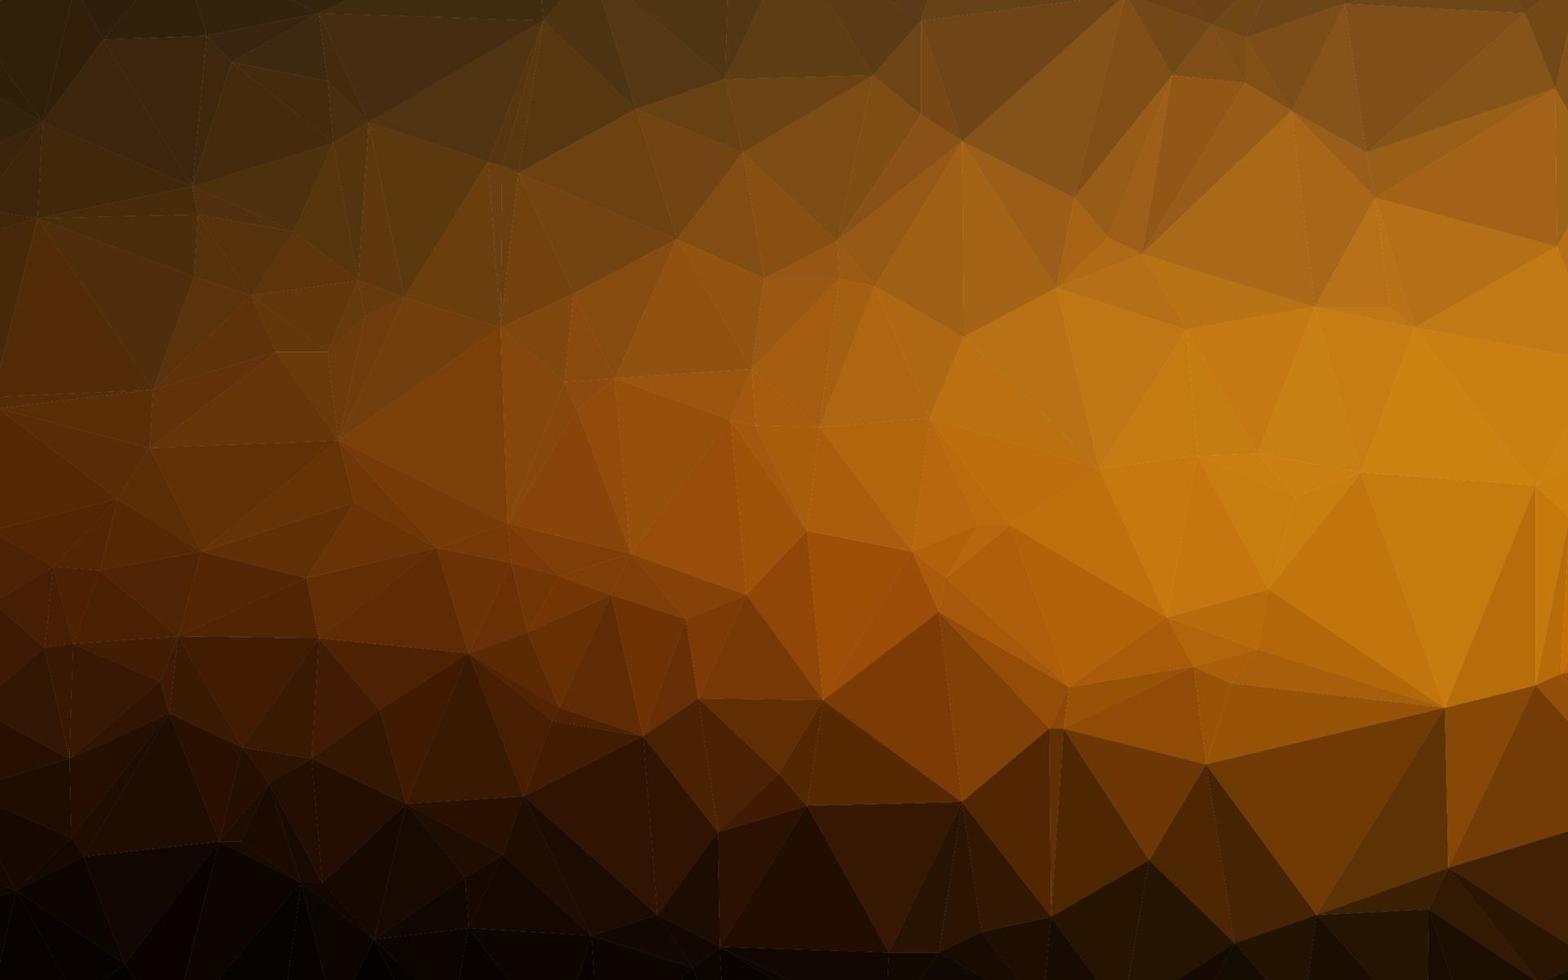 Dark Orange vector polygon abstract background.